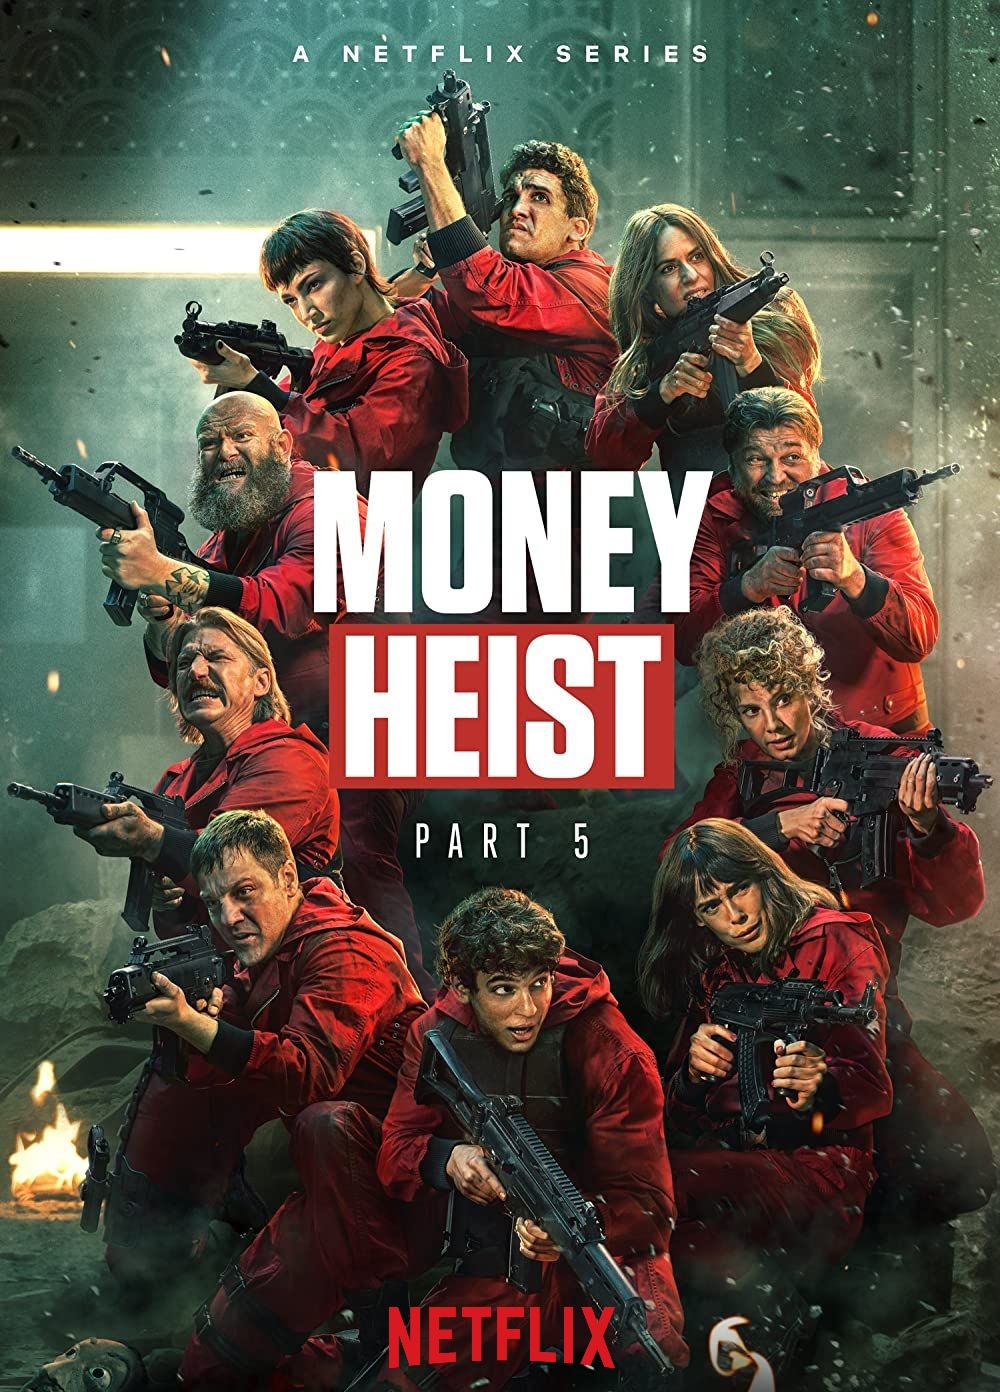 Is Money Heist Part 5 on Netflix